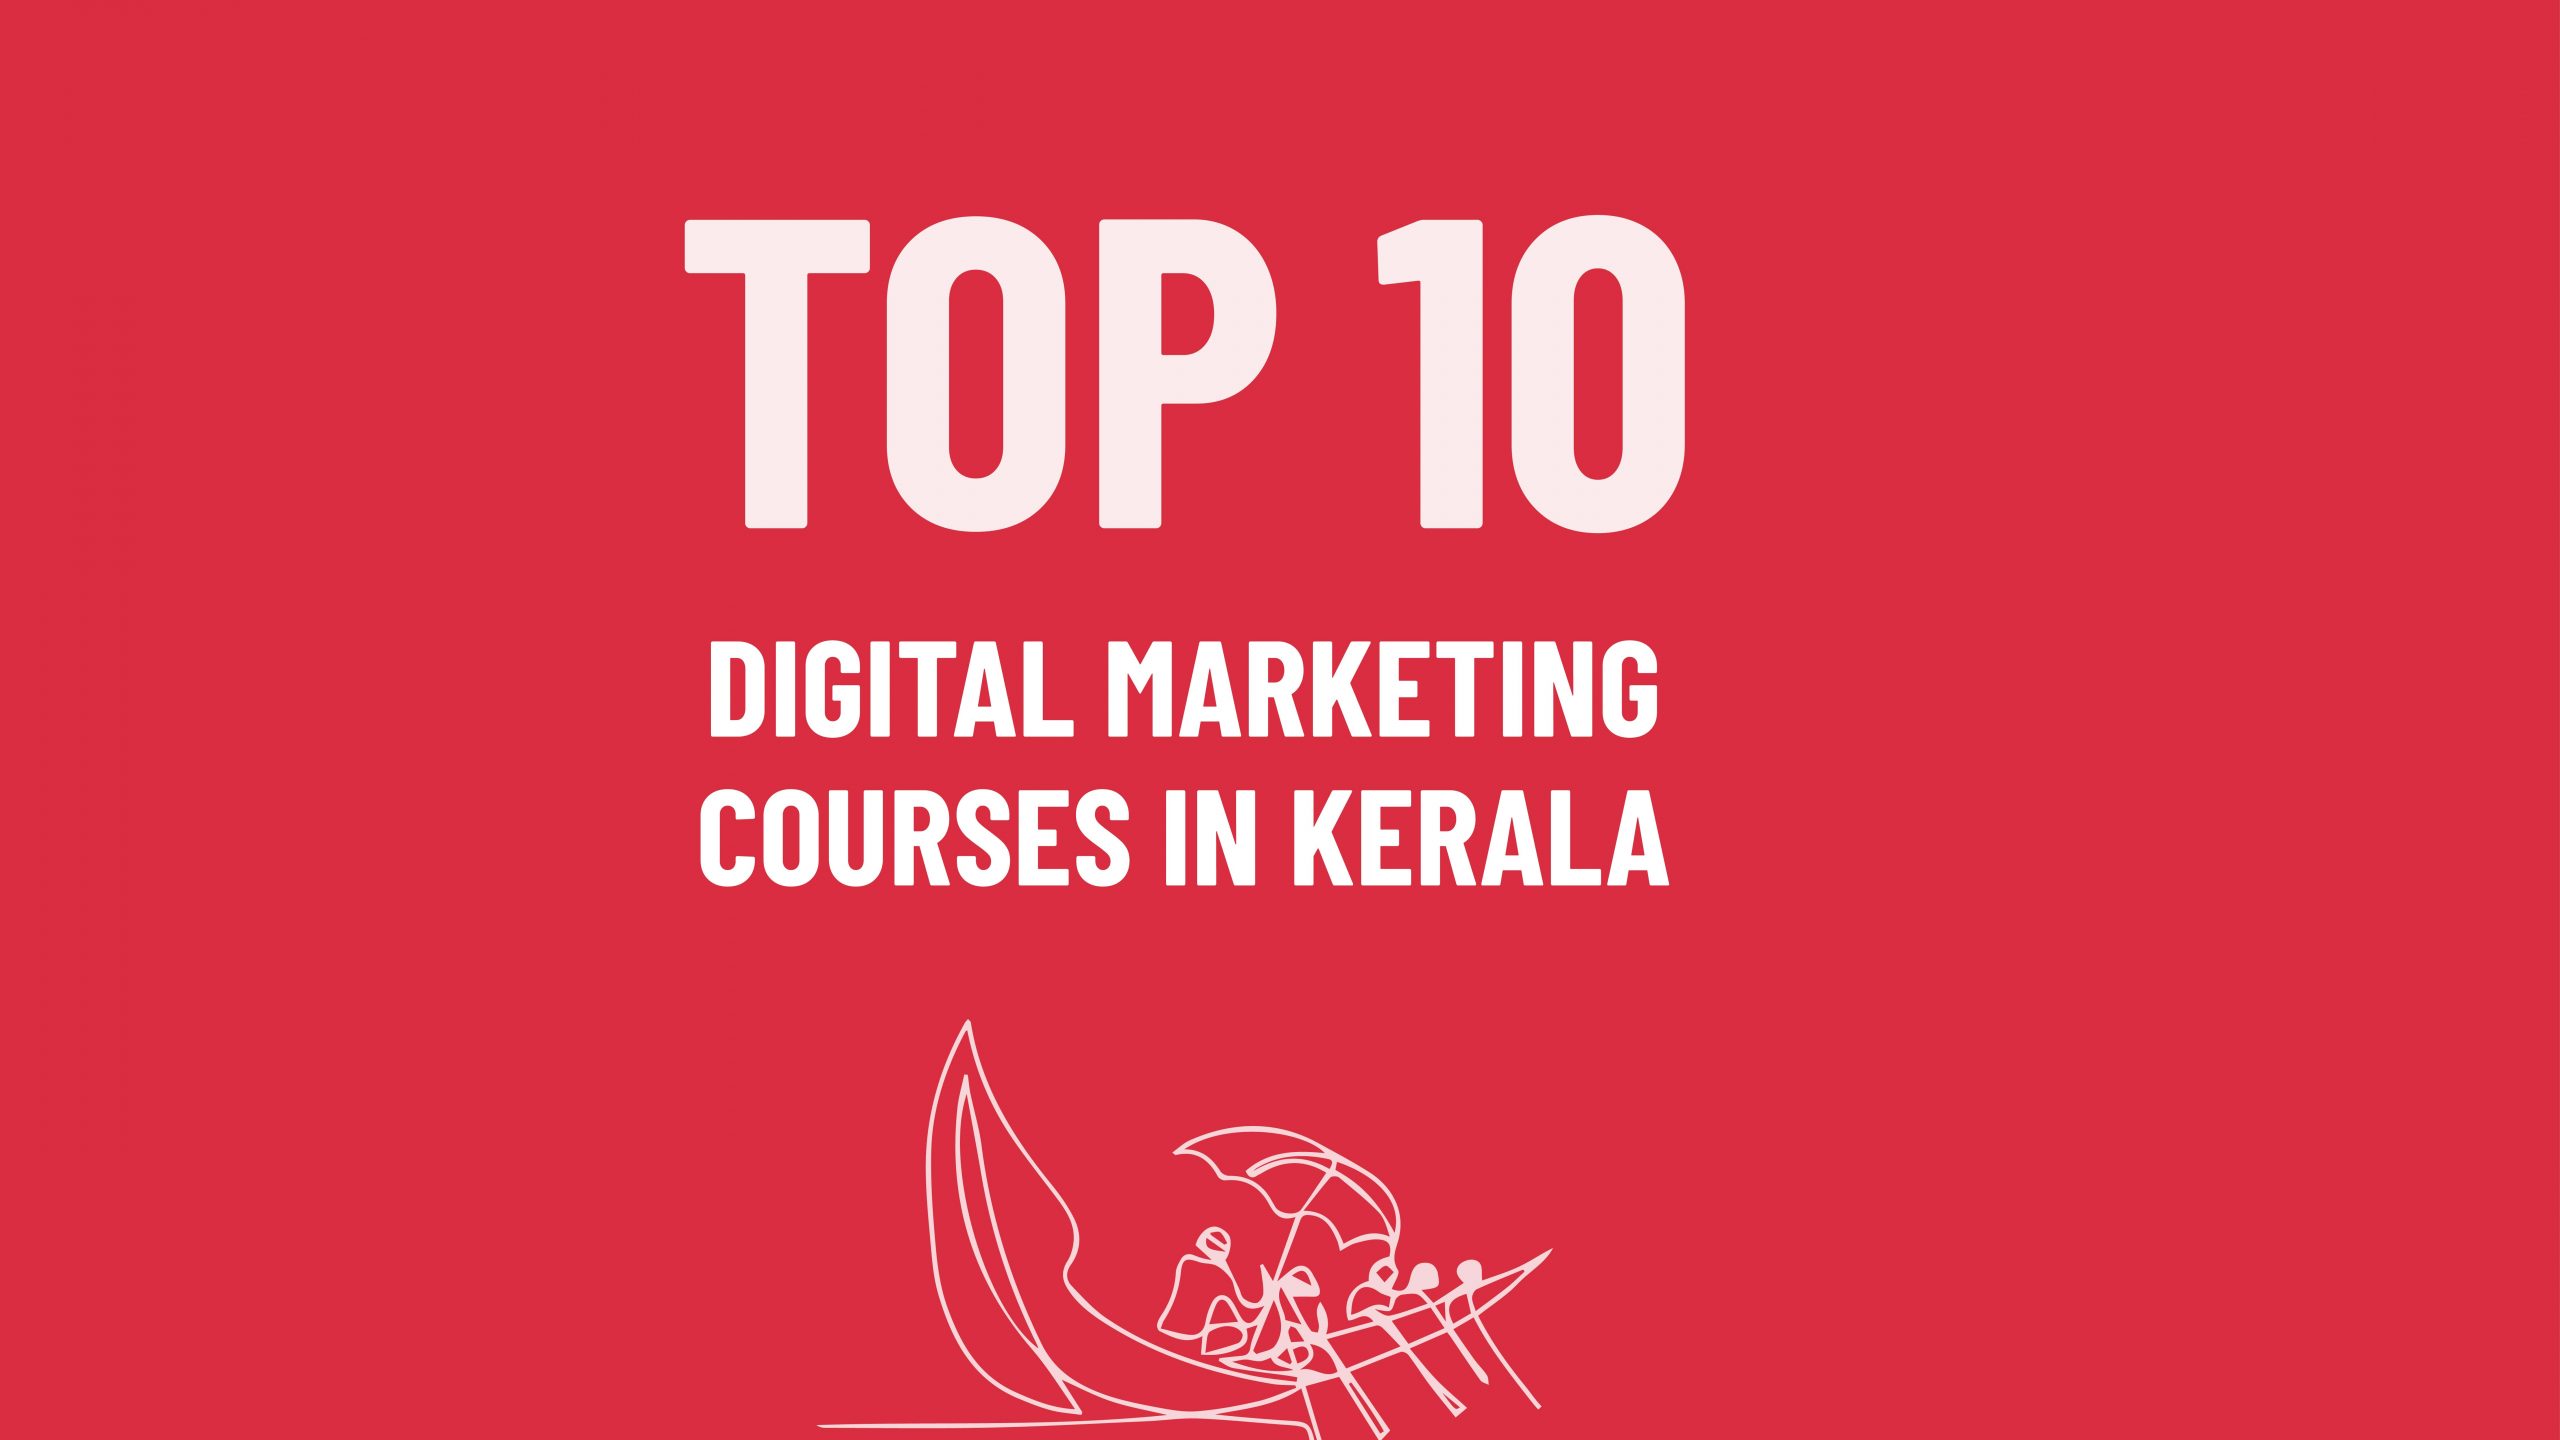 Top 10 Digital Marketing Courses in Kerala